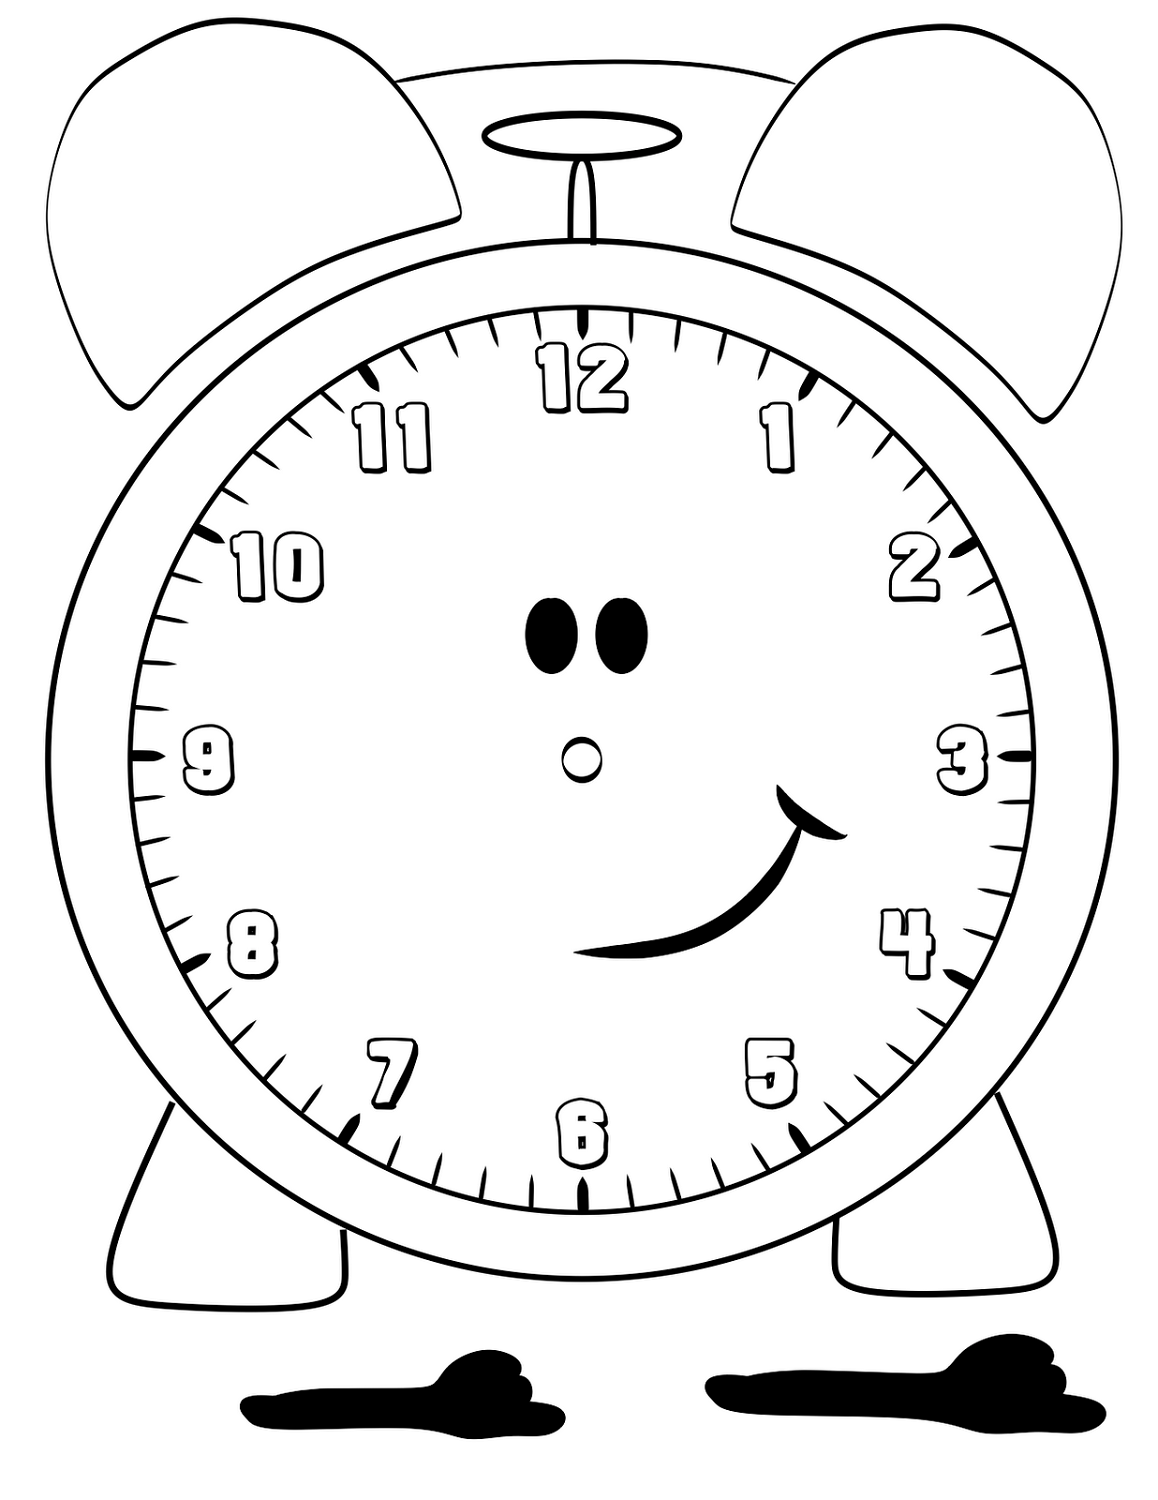 Printable Clock for kids